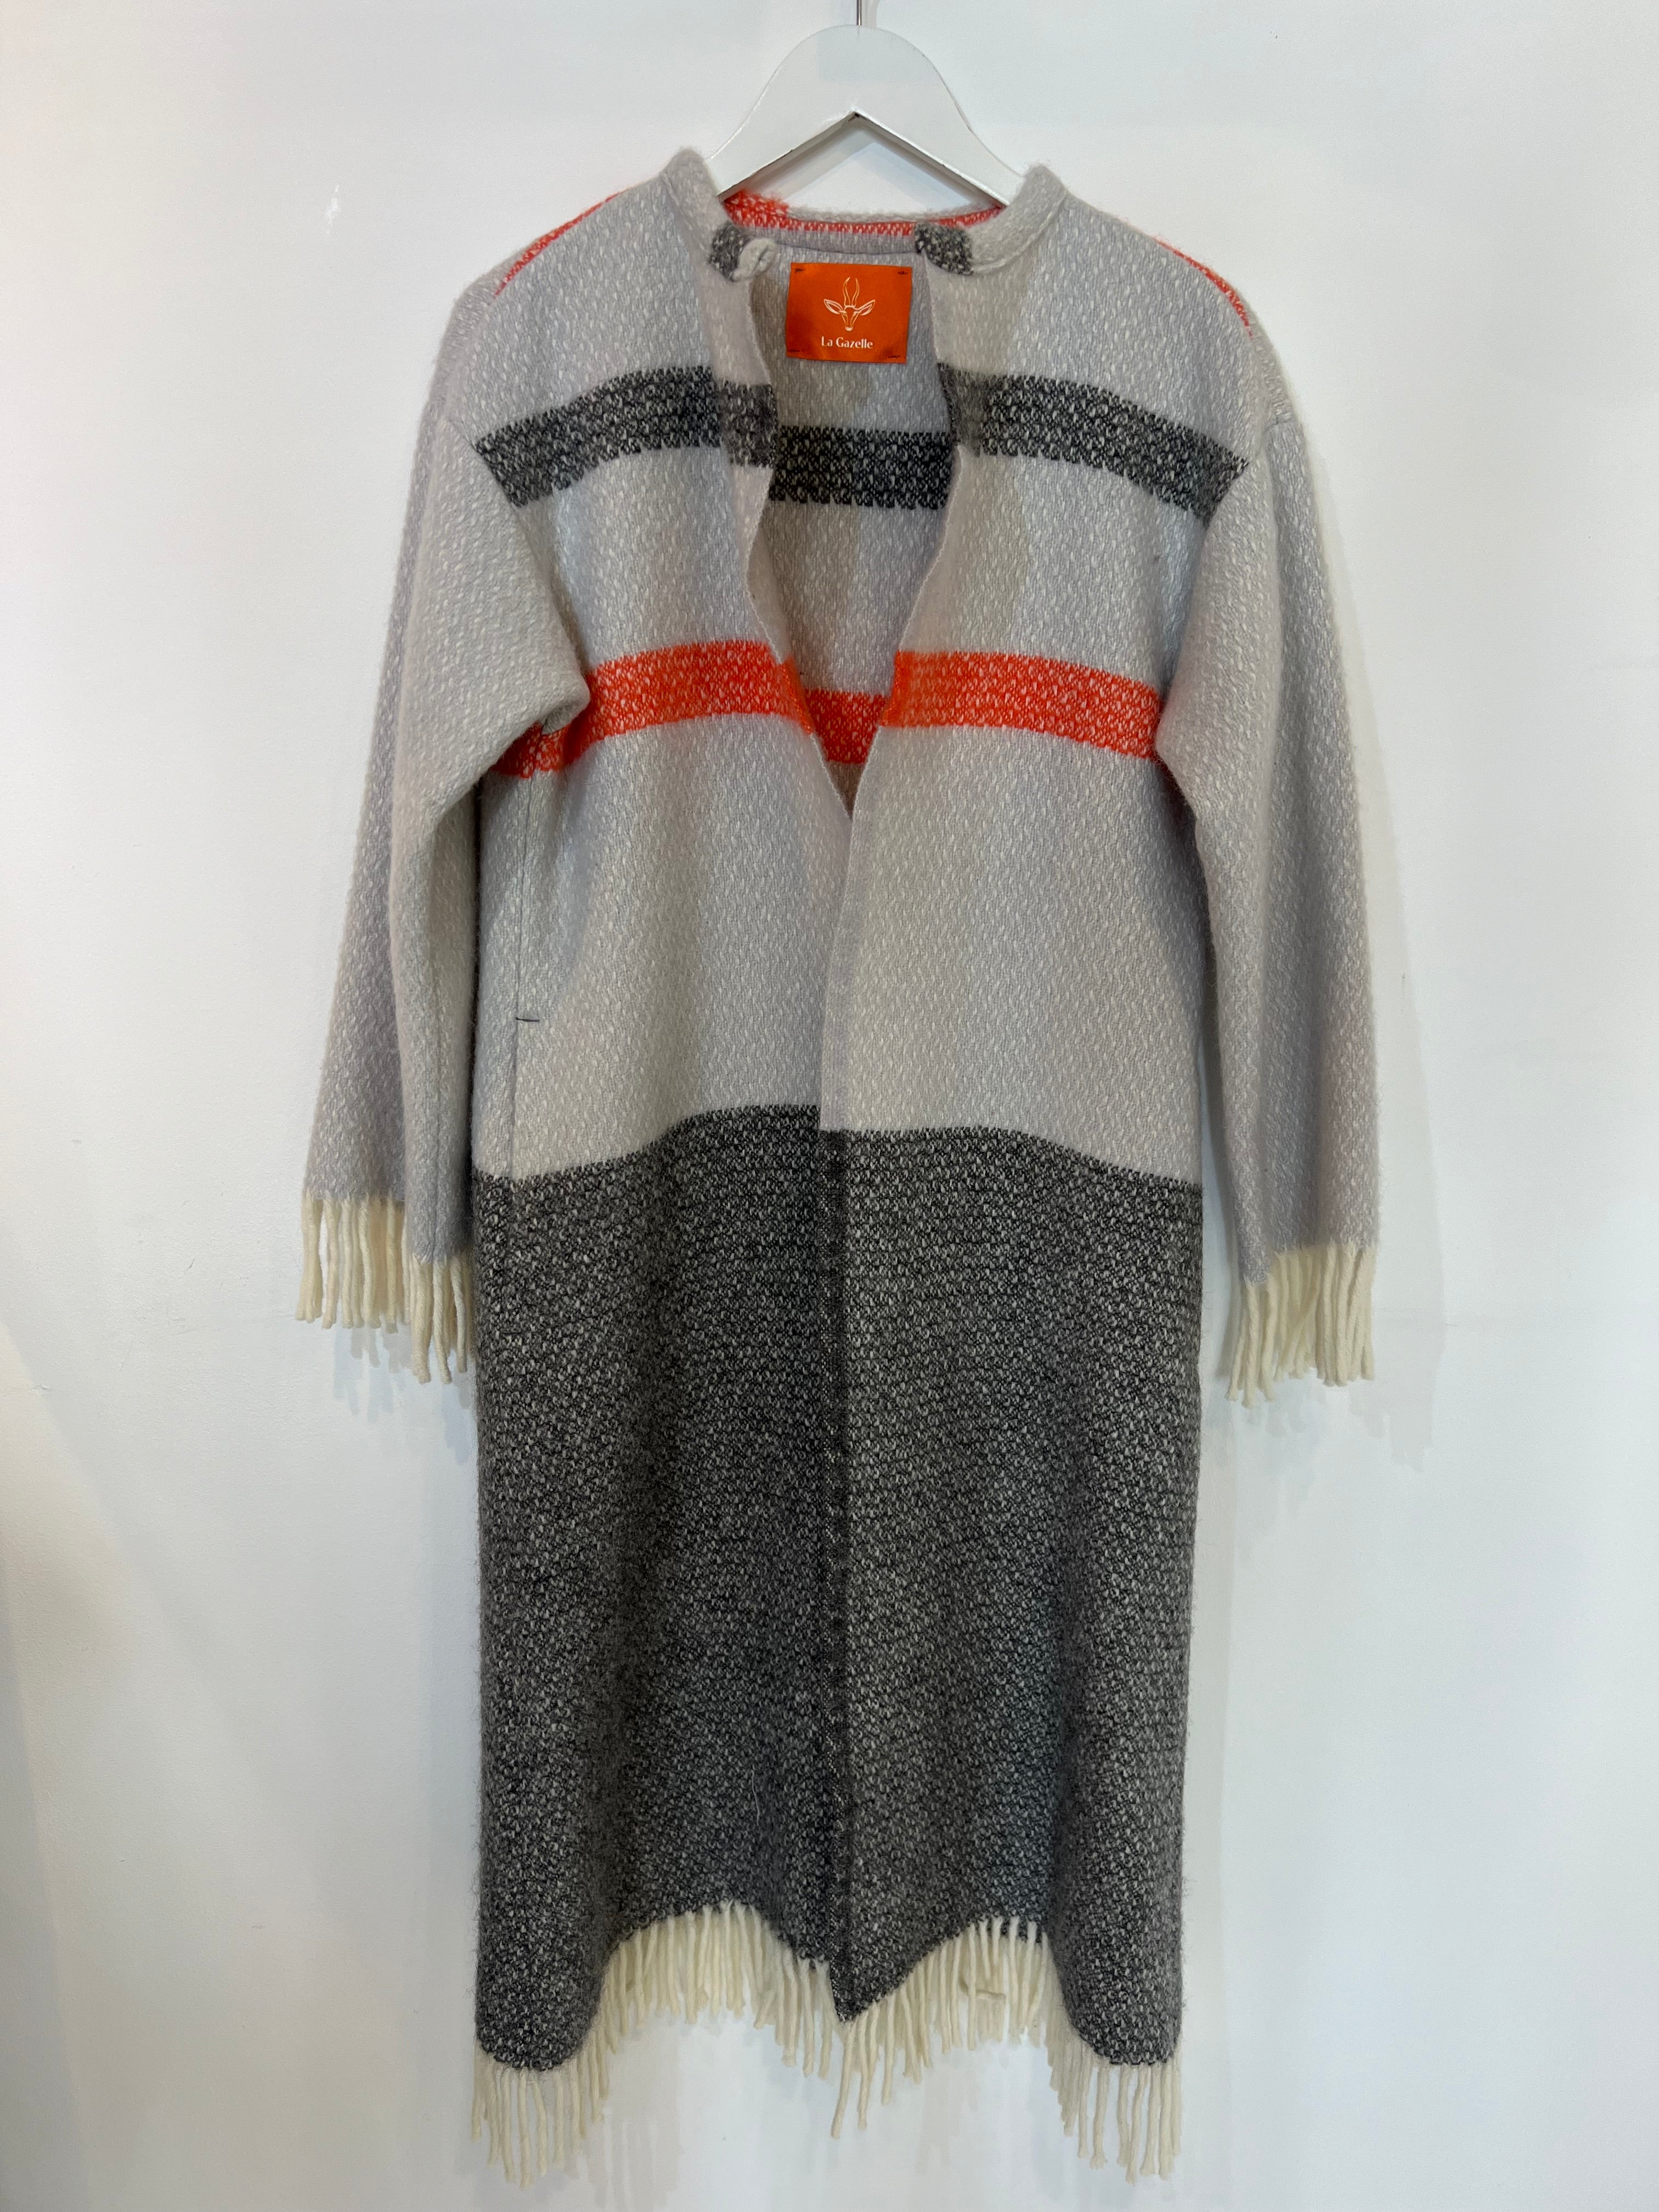 Hetre Alresford Hampshire Clothes Store La Gazelle Grey Long Coat